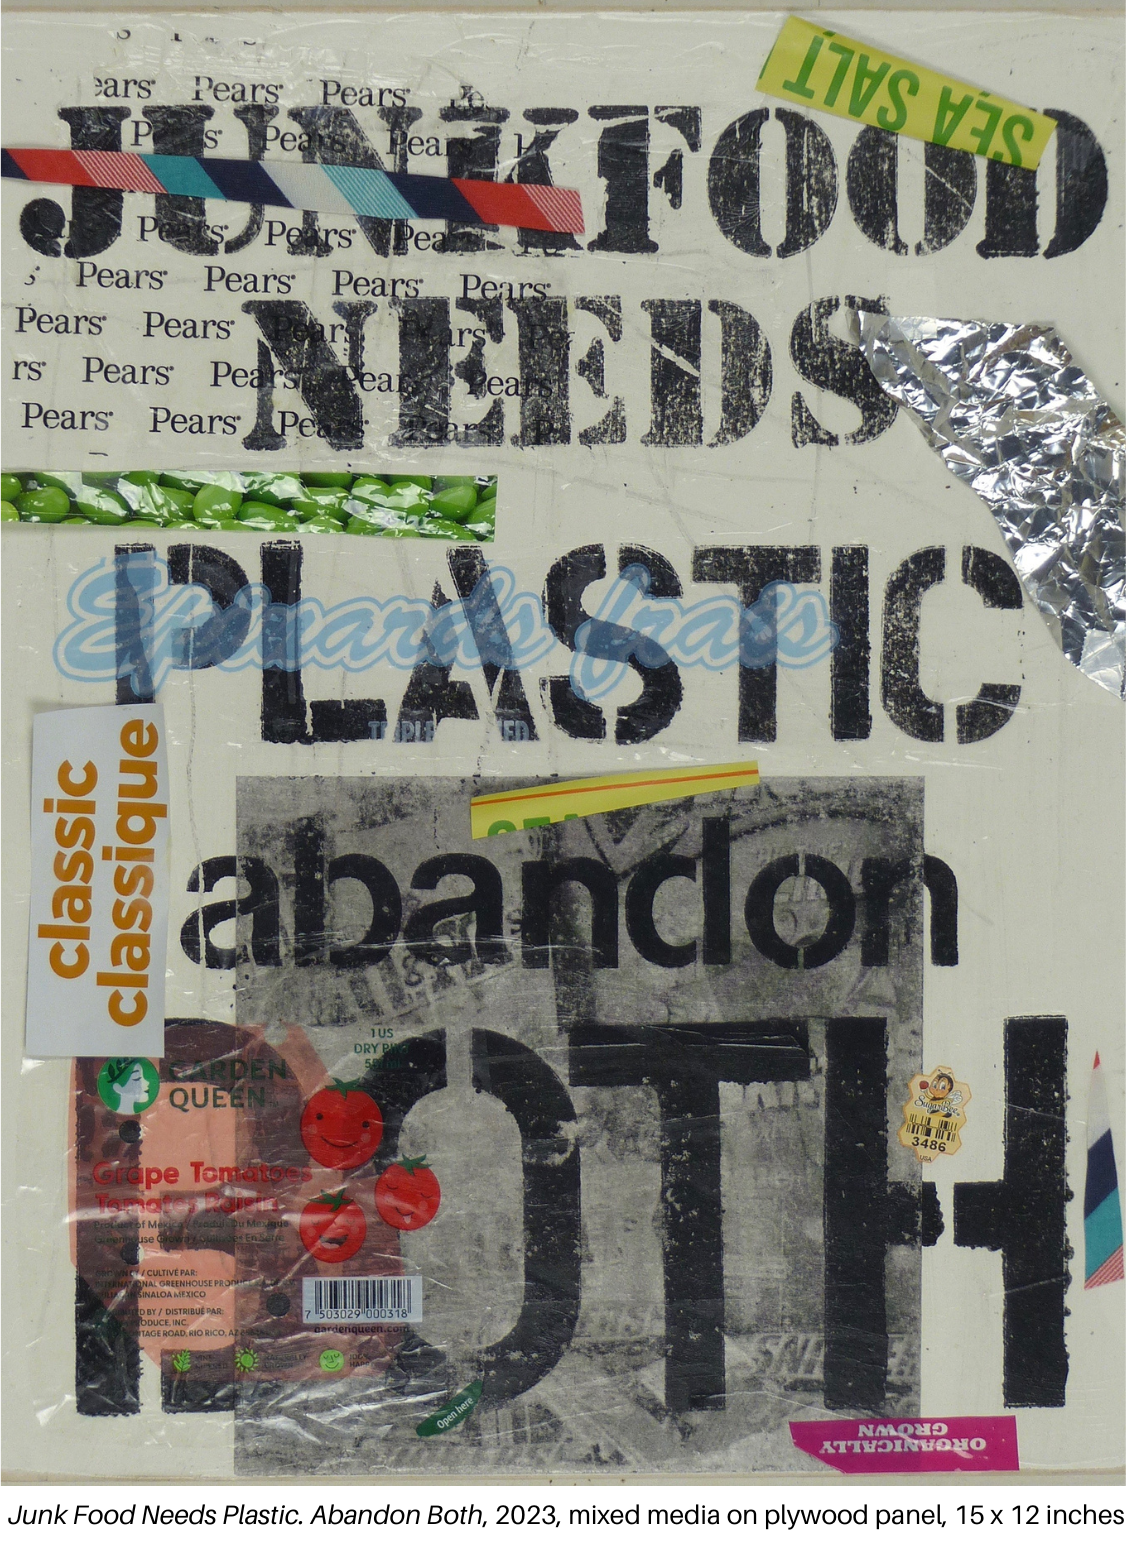 Junk Food Needs Plastic. Abandon Both